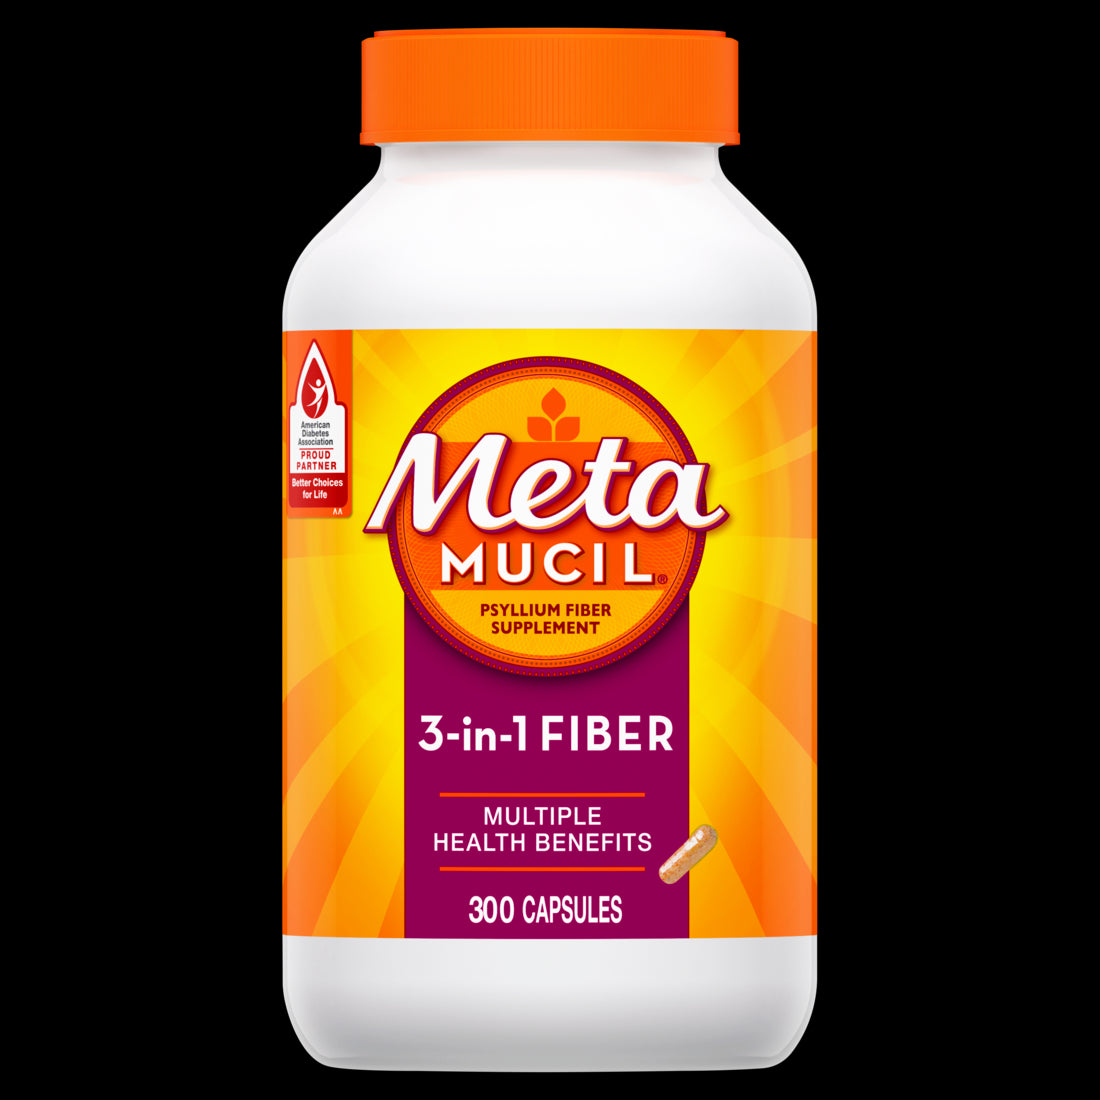 Metamucil Daily Fiber Supplement Capsules Psyllium Husk Fiber for Digestive Health Orange Flavor - 300ct/6pk